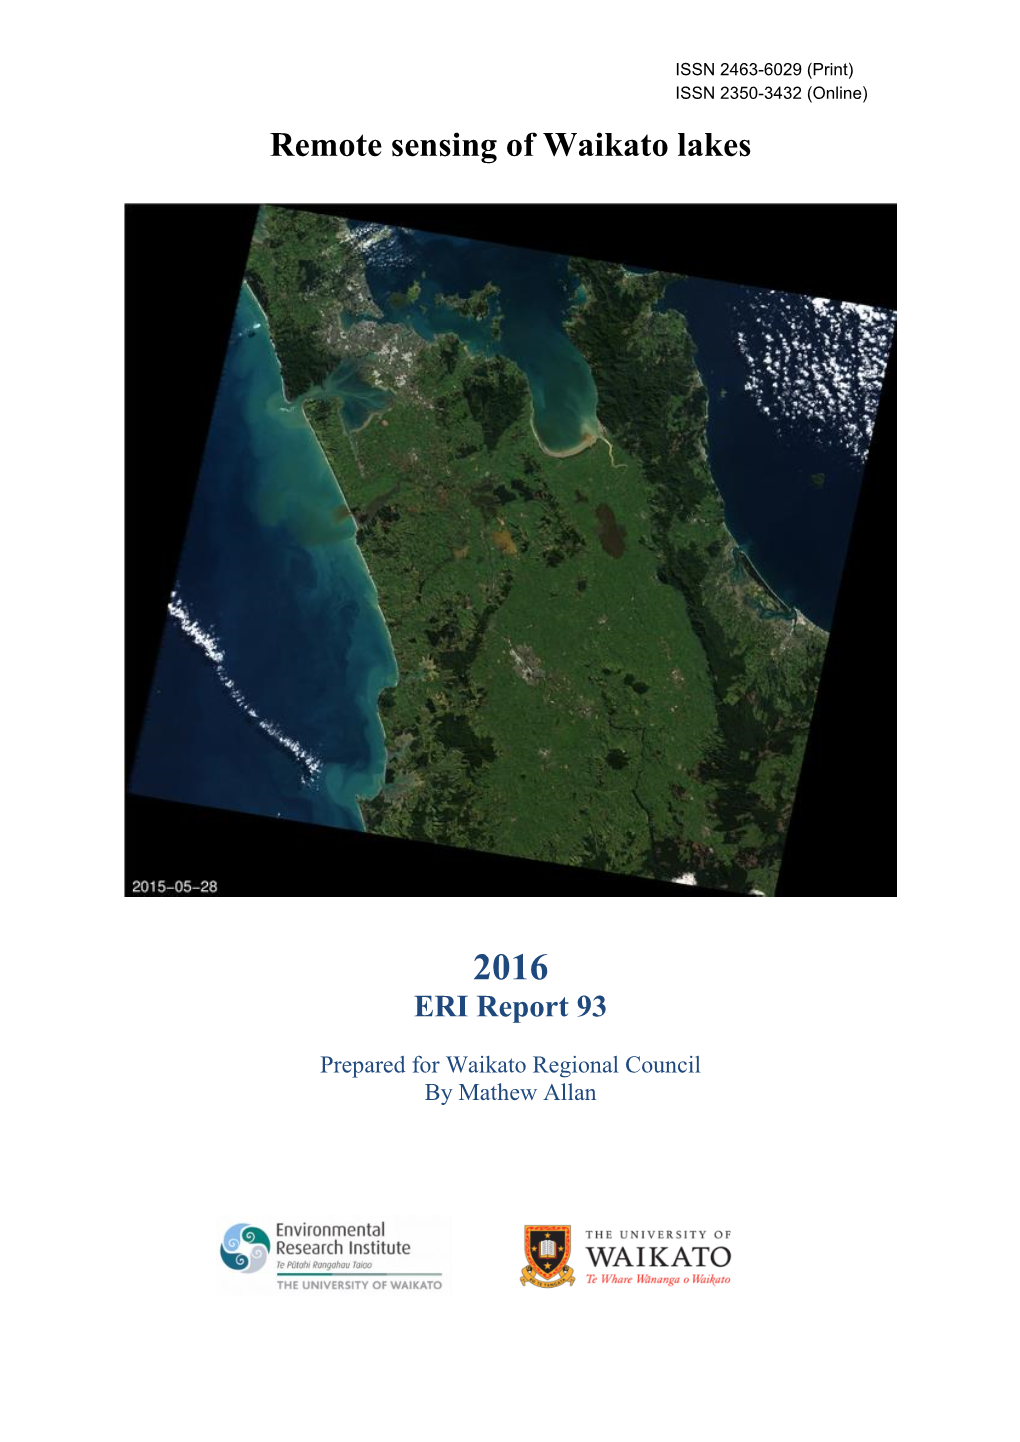 Remote Sensing of Waikato Lakes